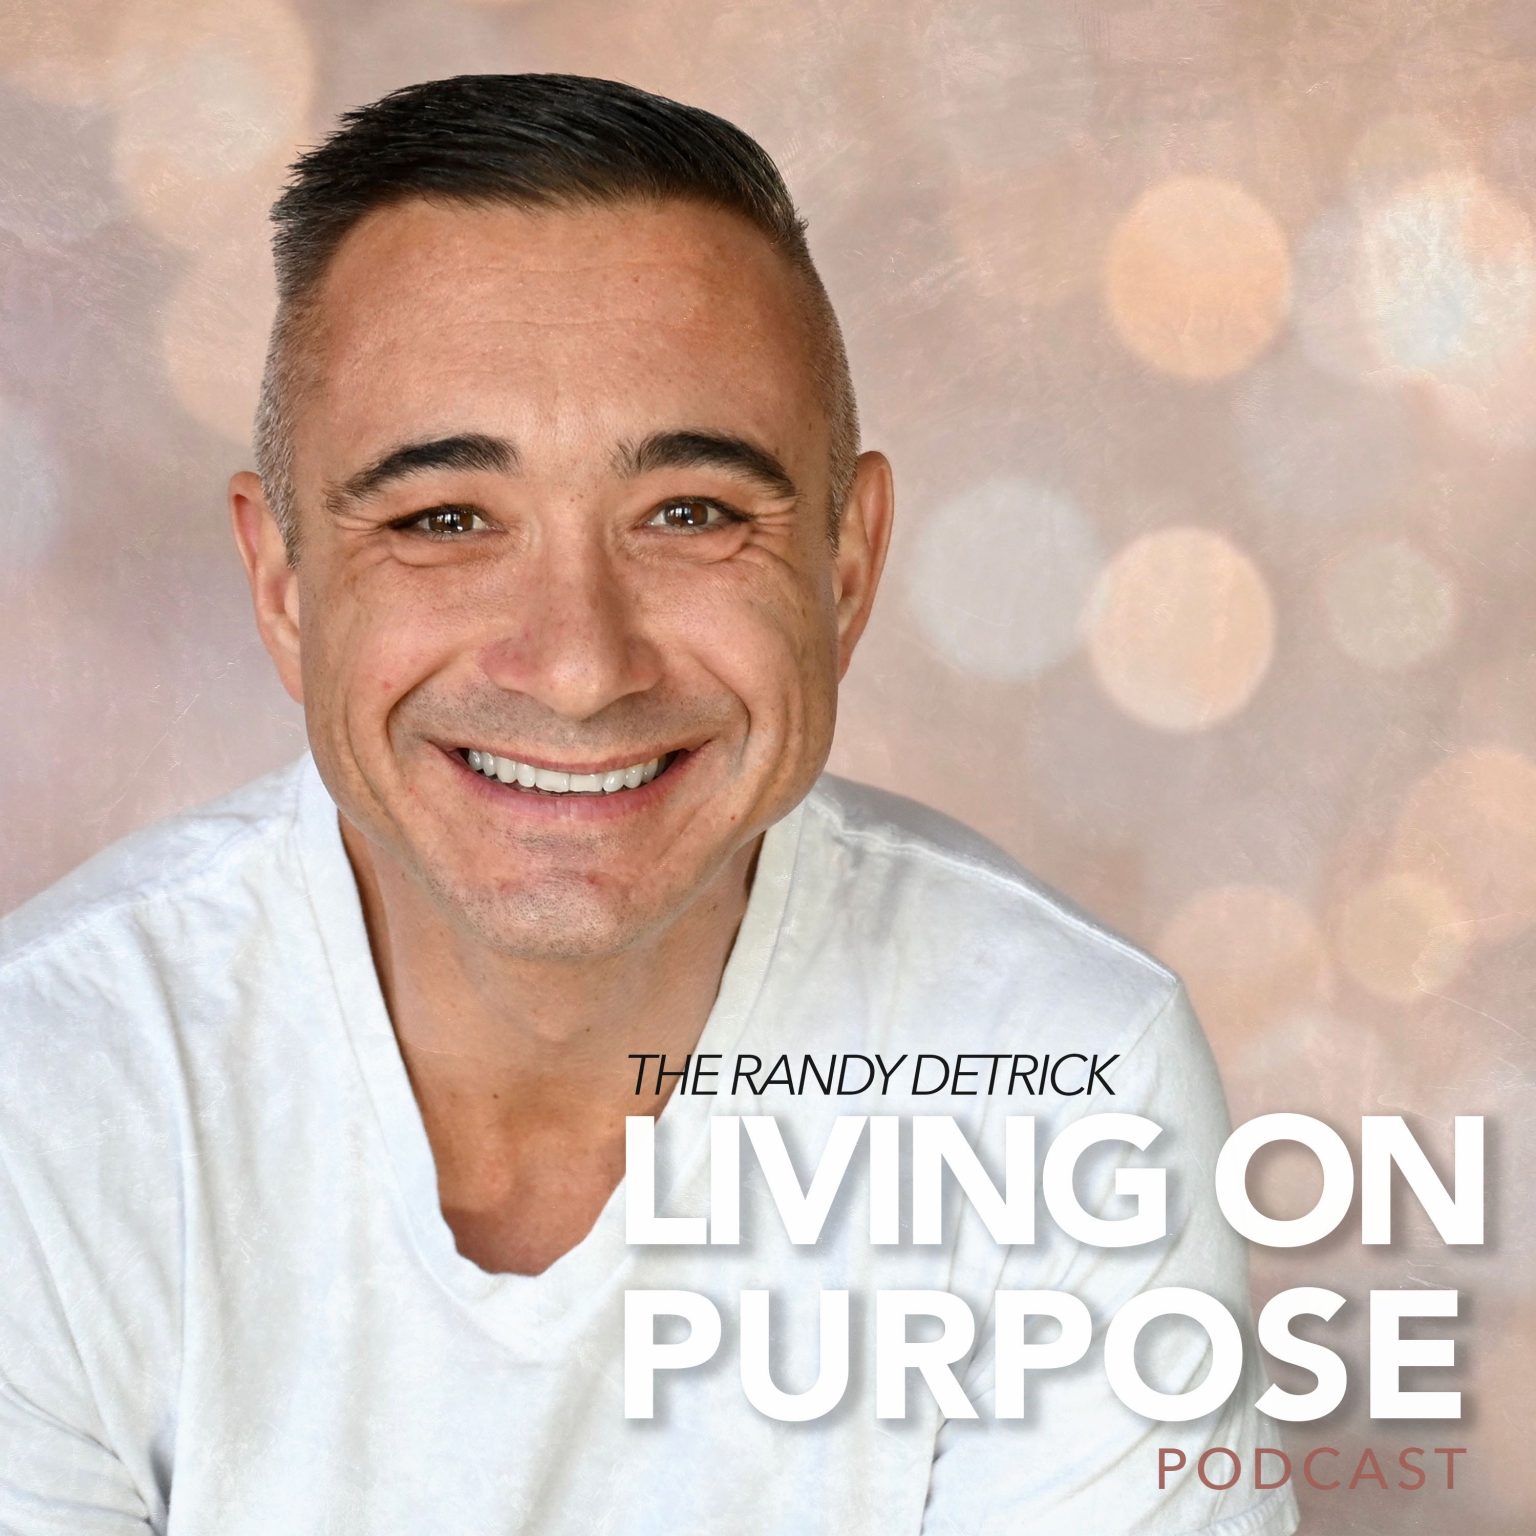 The Randy Detrick "Living On Purpose" Podcast Album Artwork